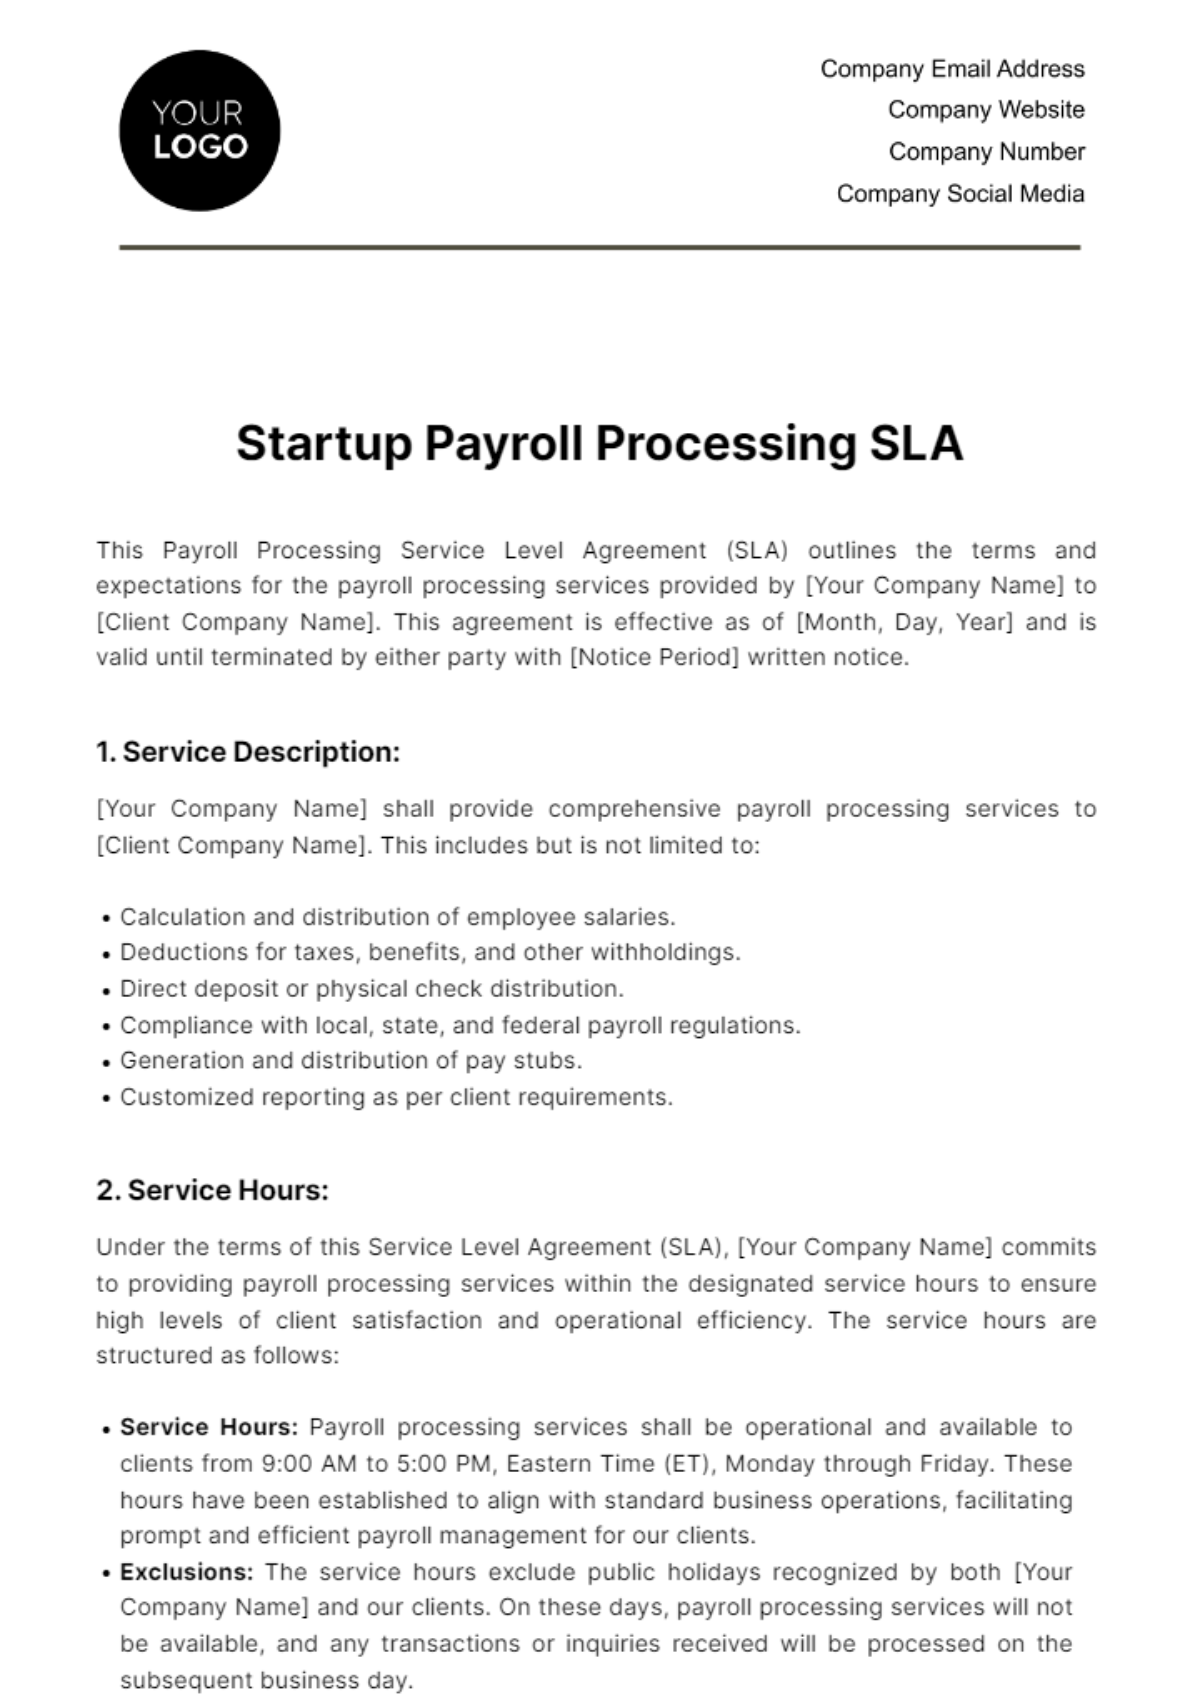 Free Startup Payroll Processing SLA Template